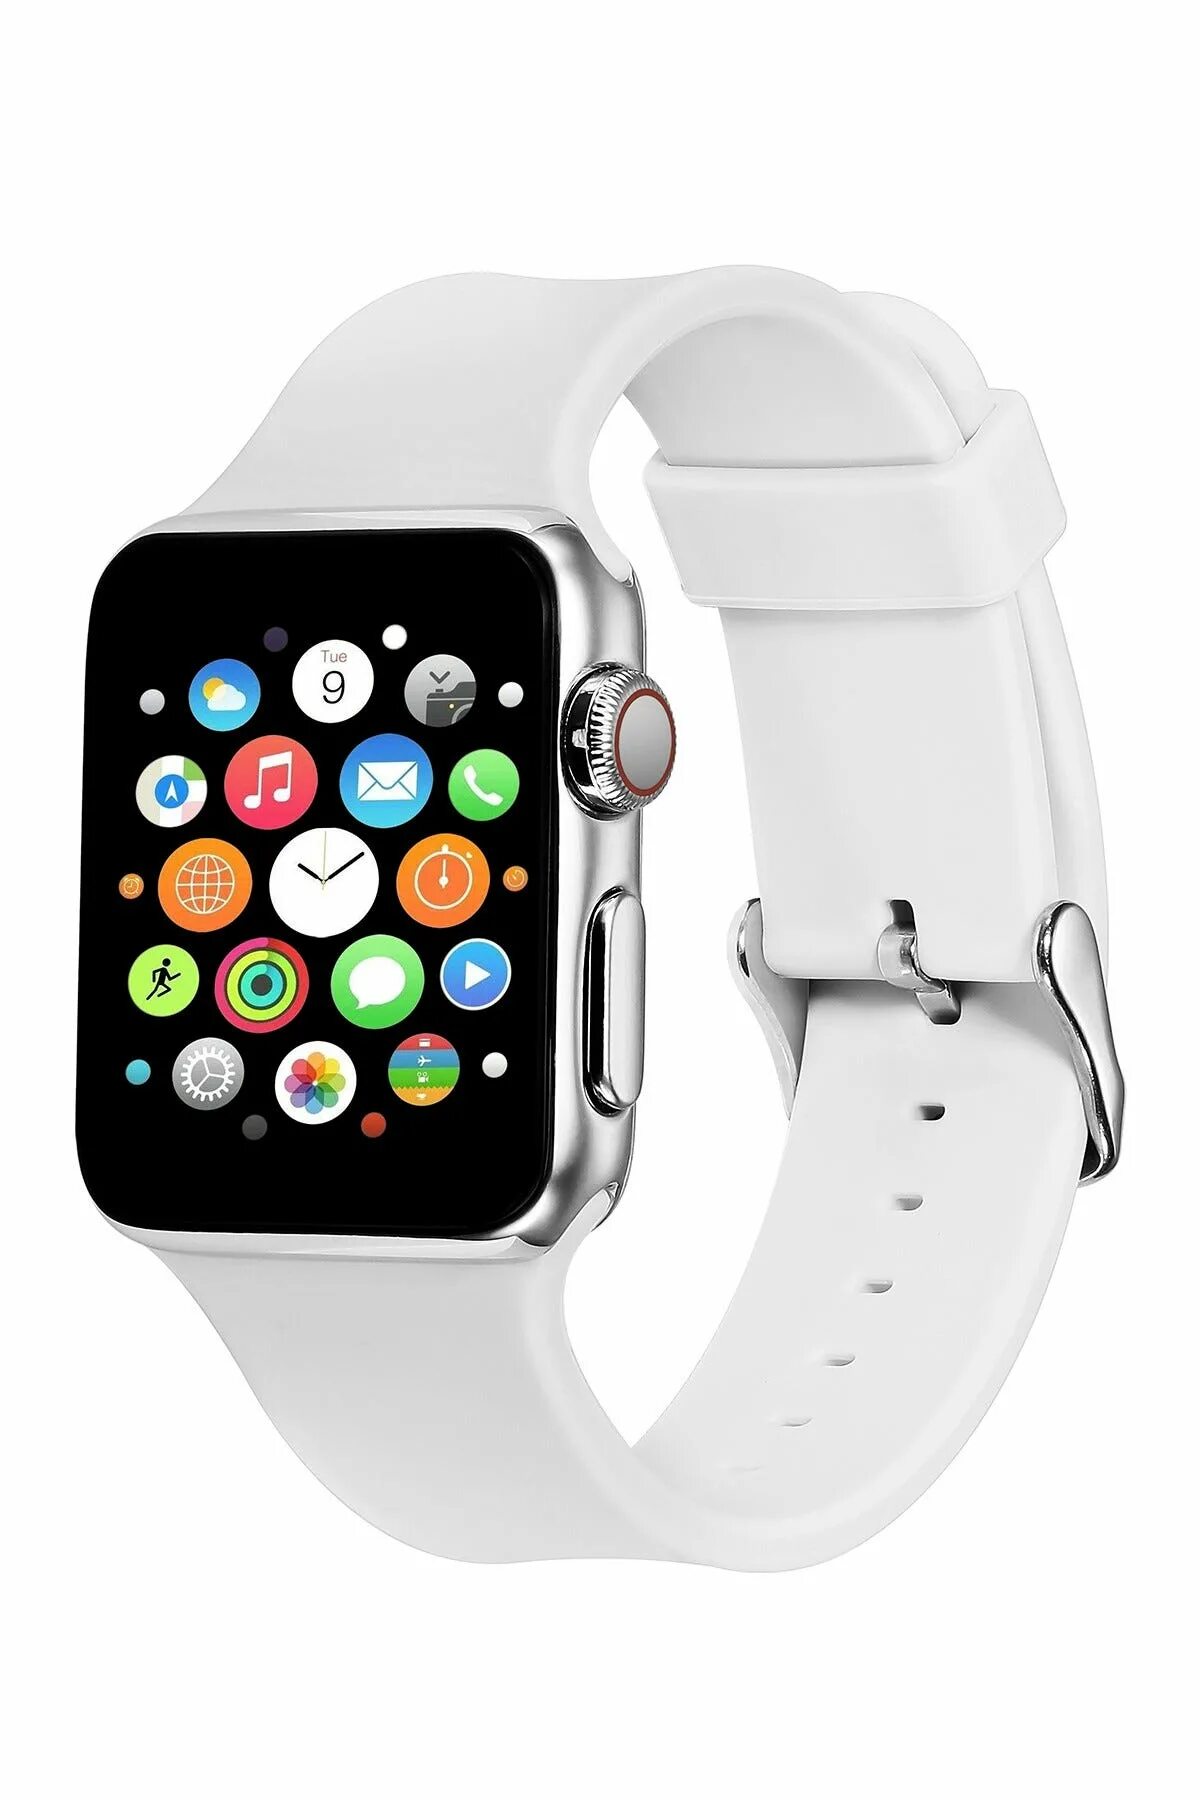 Watch часы днс. Apple watch 1. Apple watch 2 38 mm. Apple watch 4 38 mm. Эппл вотч 1 версия.